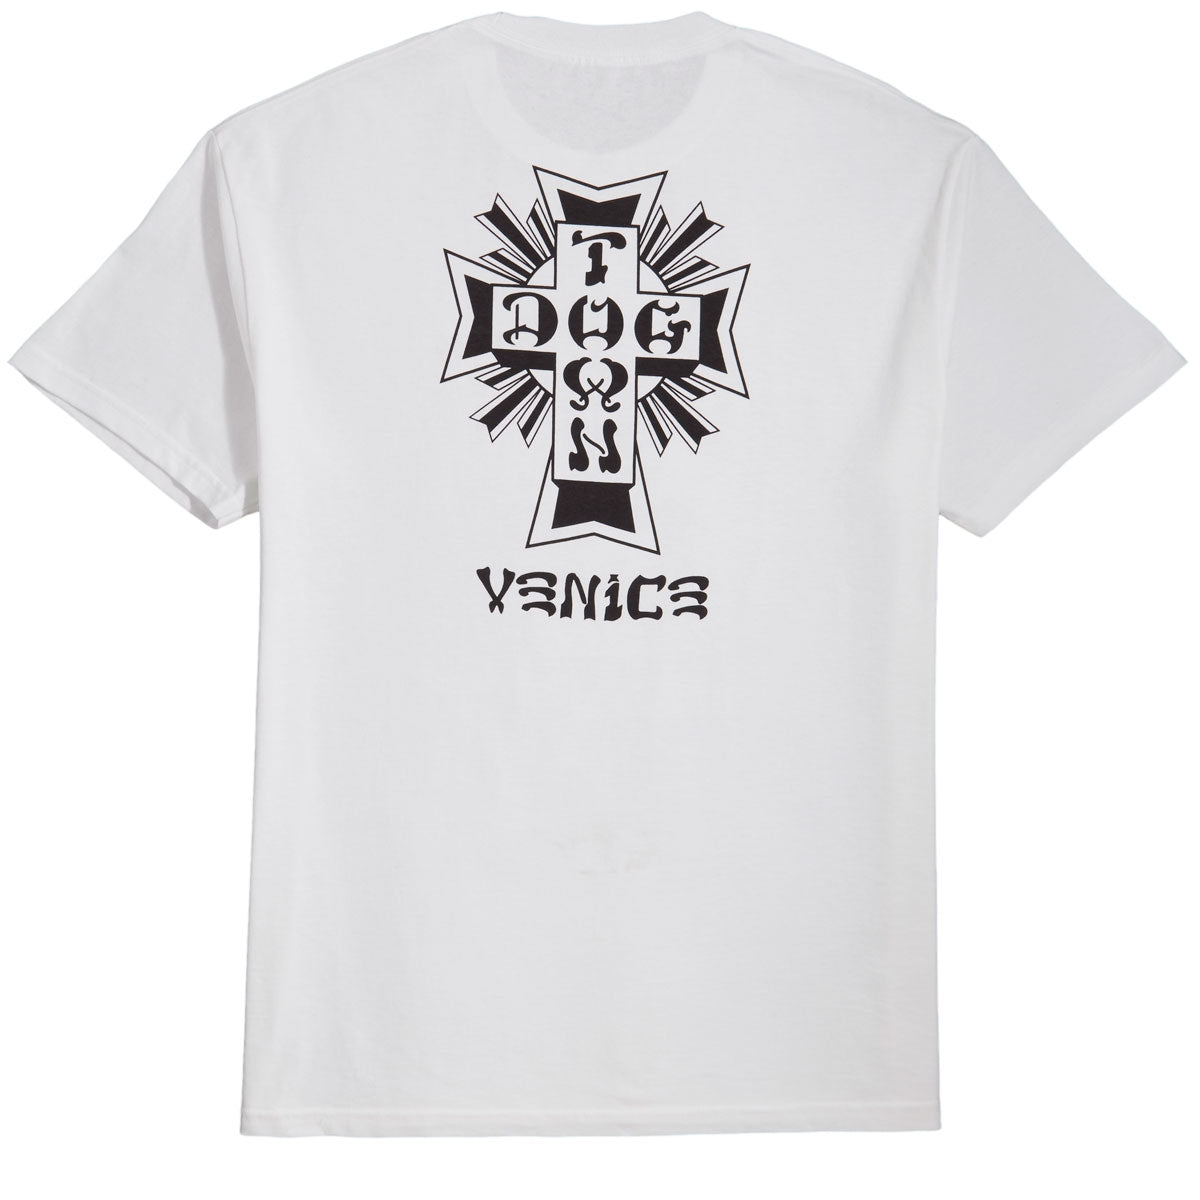 Dogtown Cross Logo Venice T-Shirt - White/Black image 1